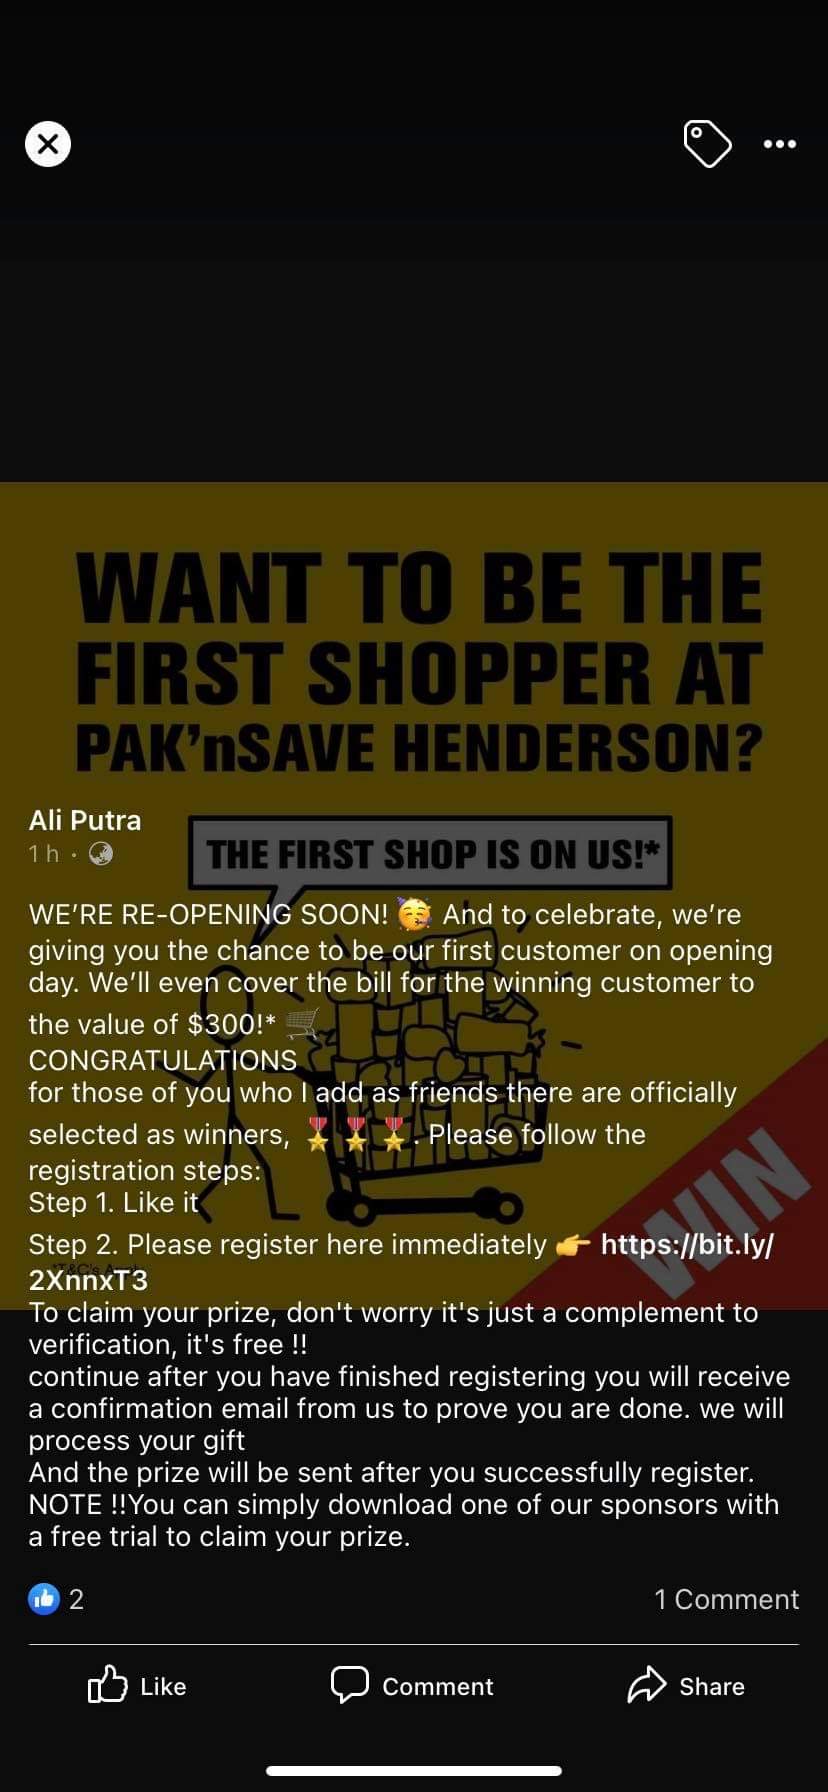 Scam alert - PAK'nSAVE Henderson Facebook Competition